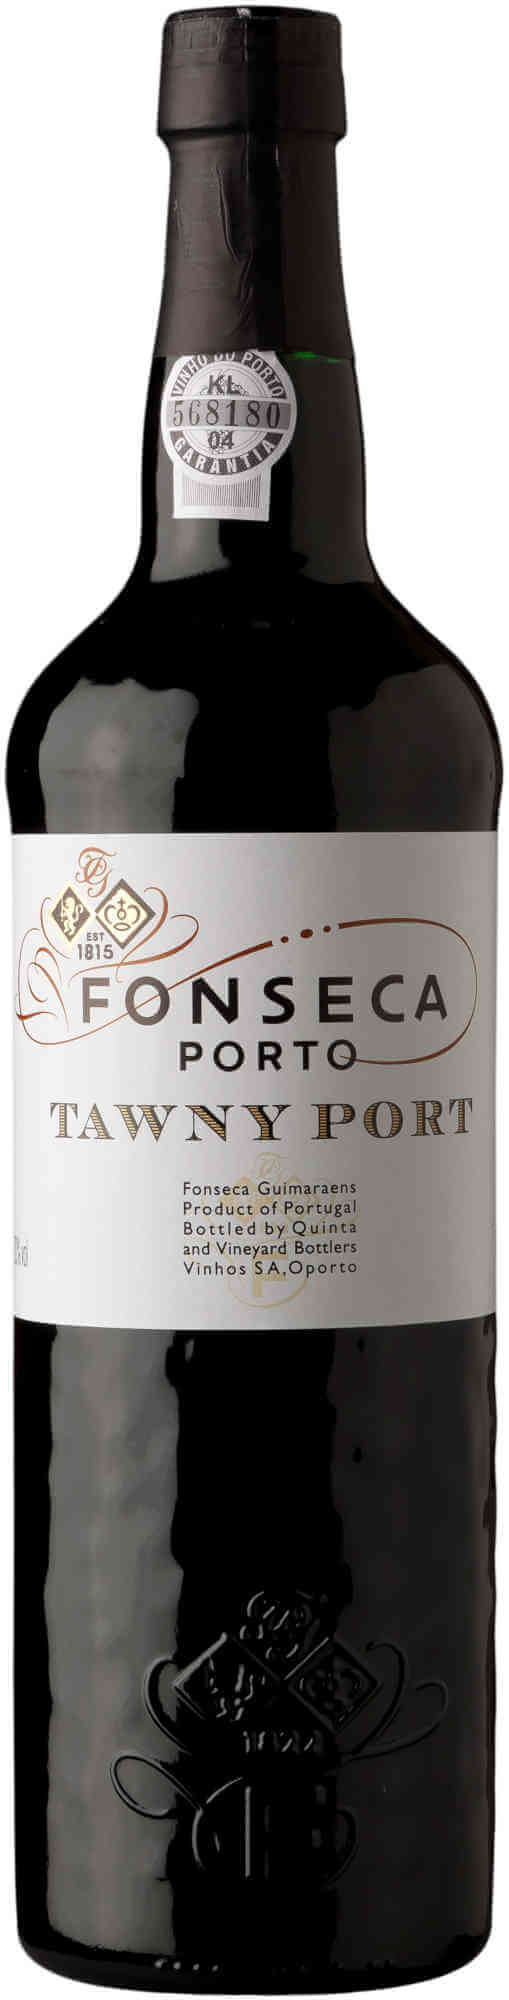 Fonseca-Tawny-Port